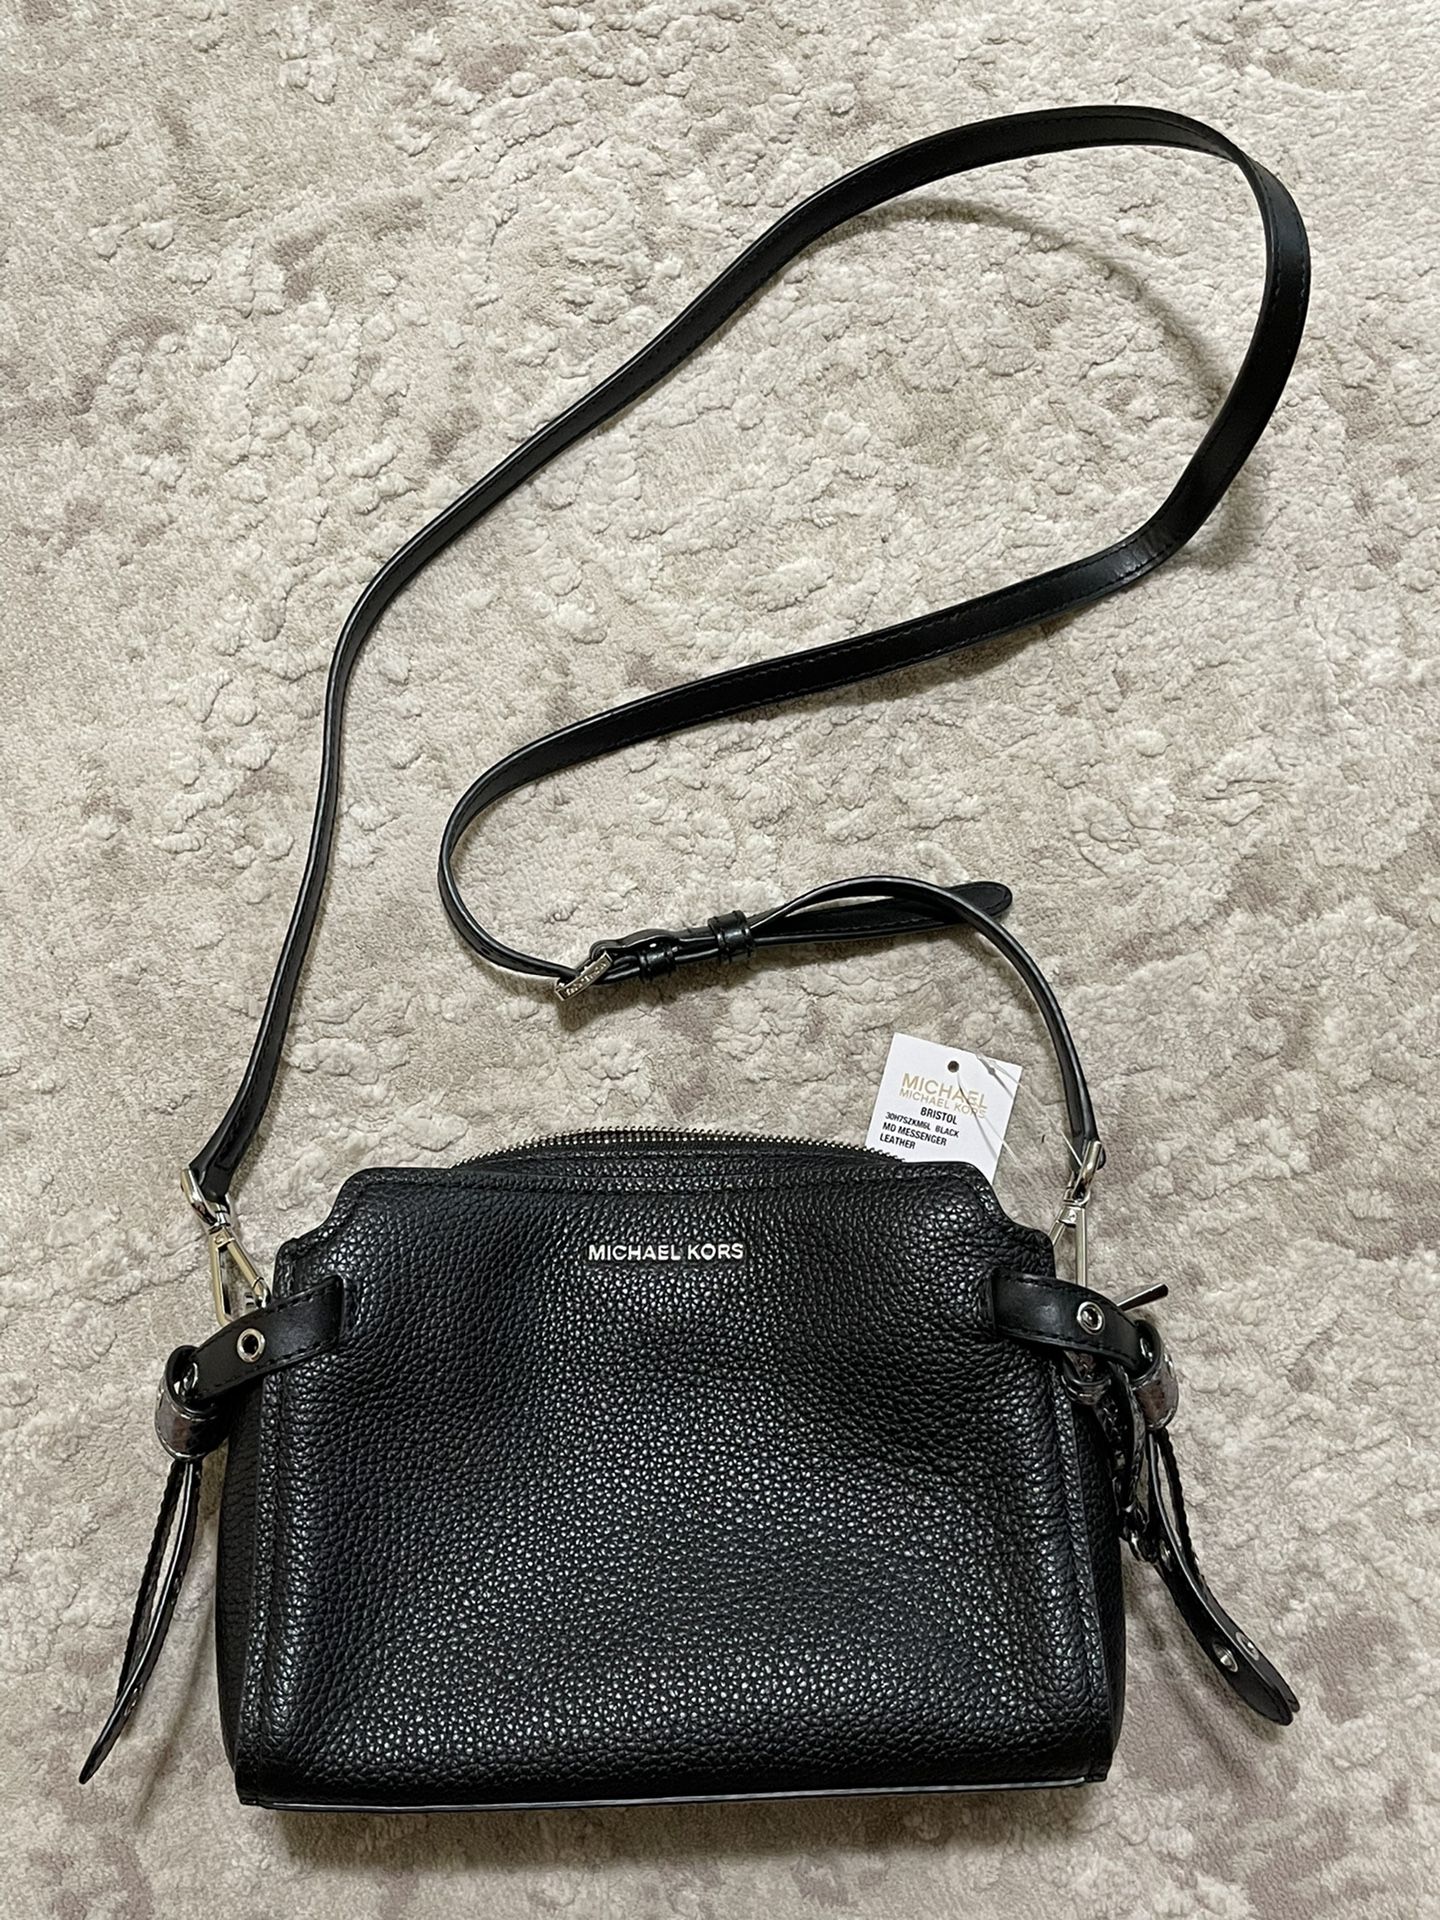 Michael Kors Black Leather Messenger Bag